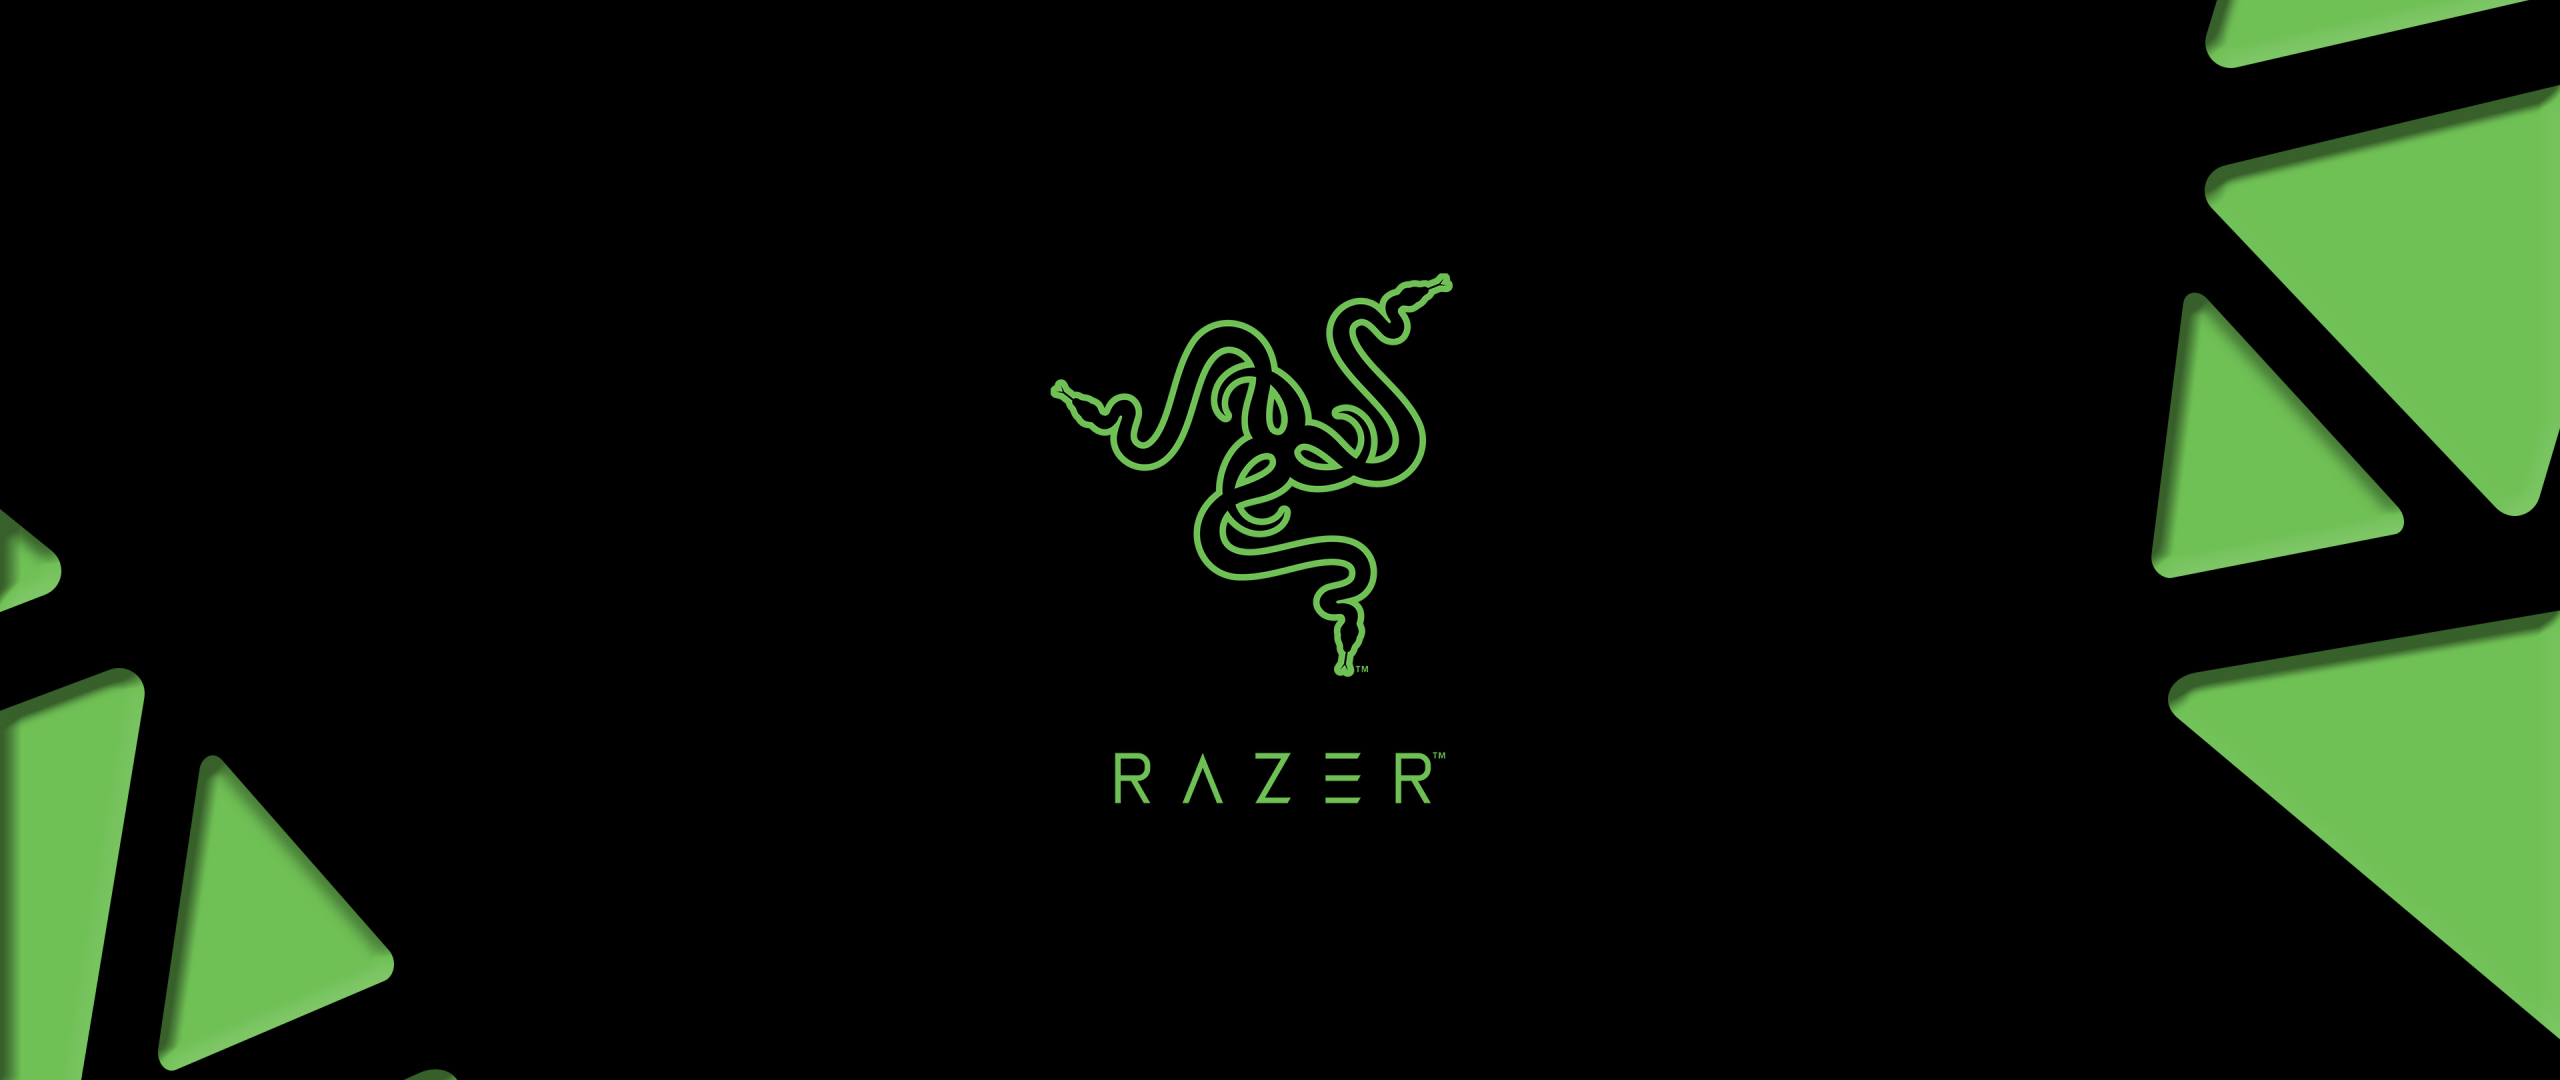 2560x1080 Razer Gamer Logo 2560x1080 Resolution Wallpaper Hd Hi Tech 4k Wallpapers Images Photos And Background